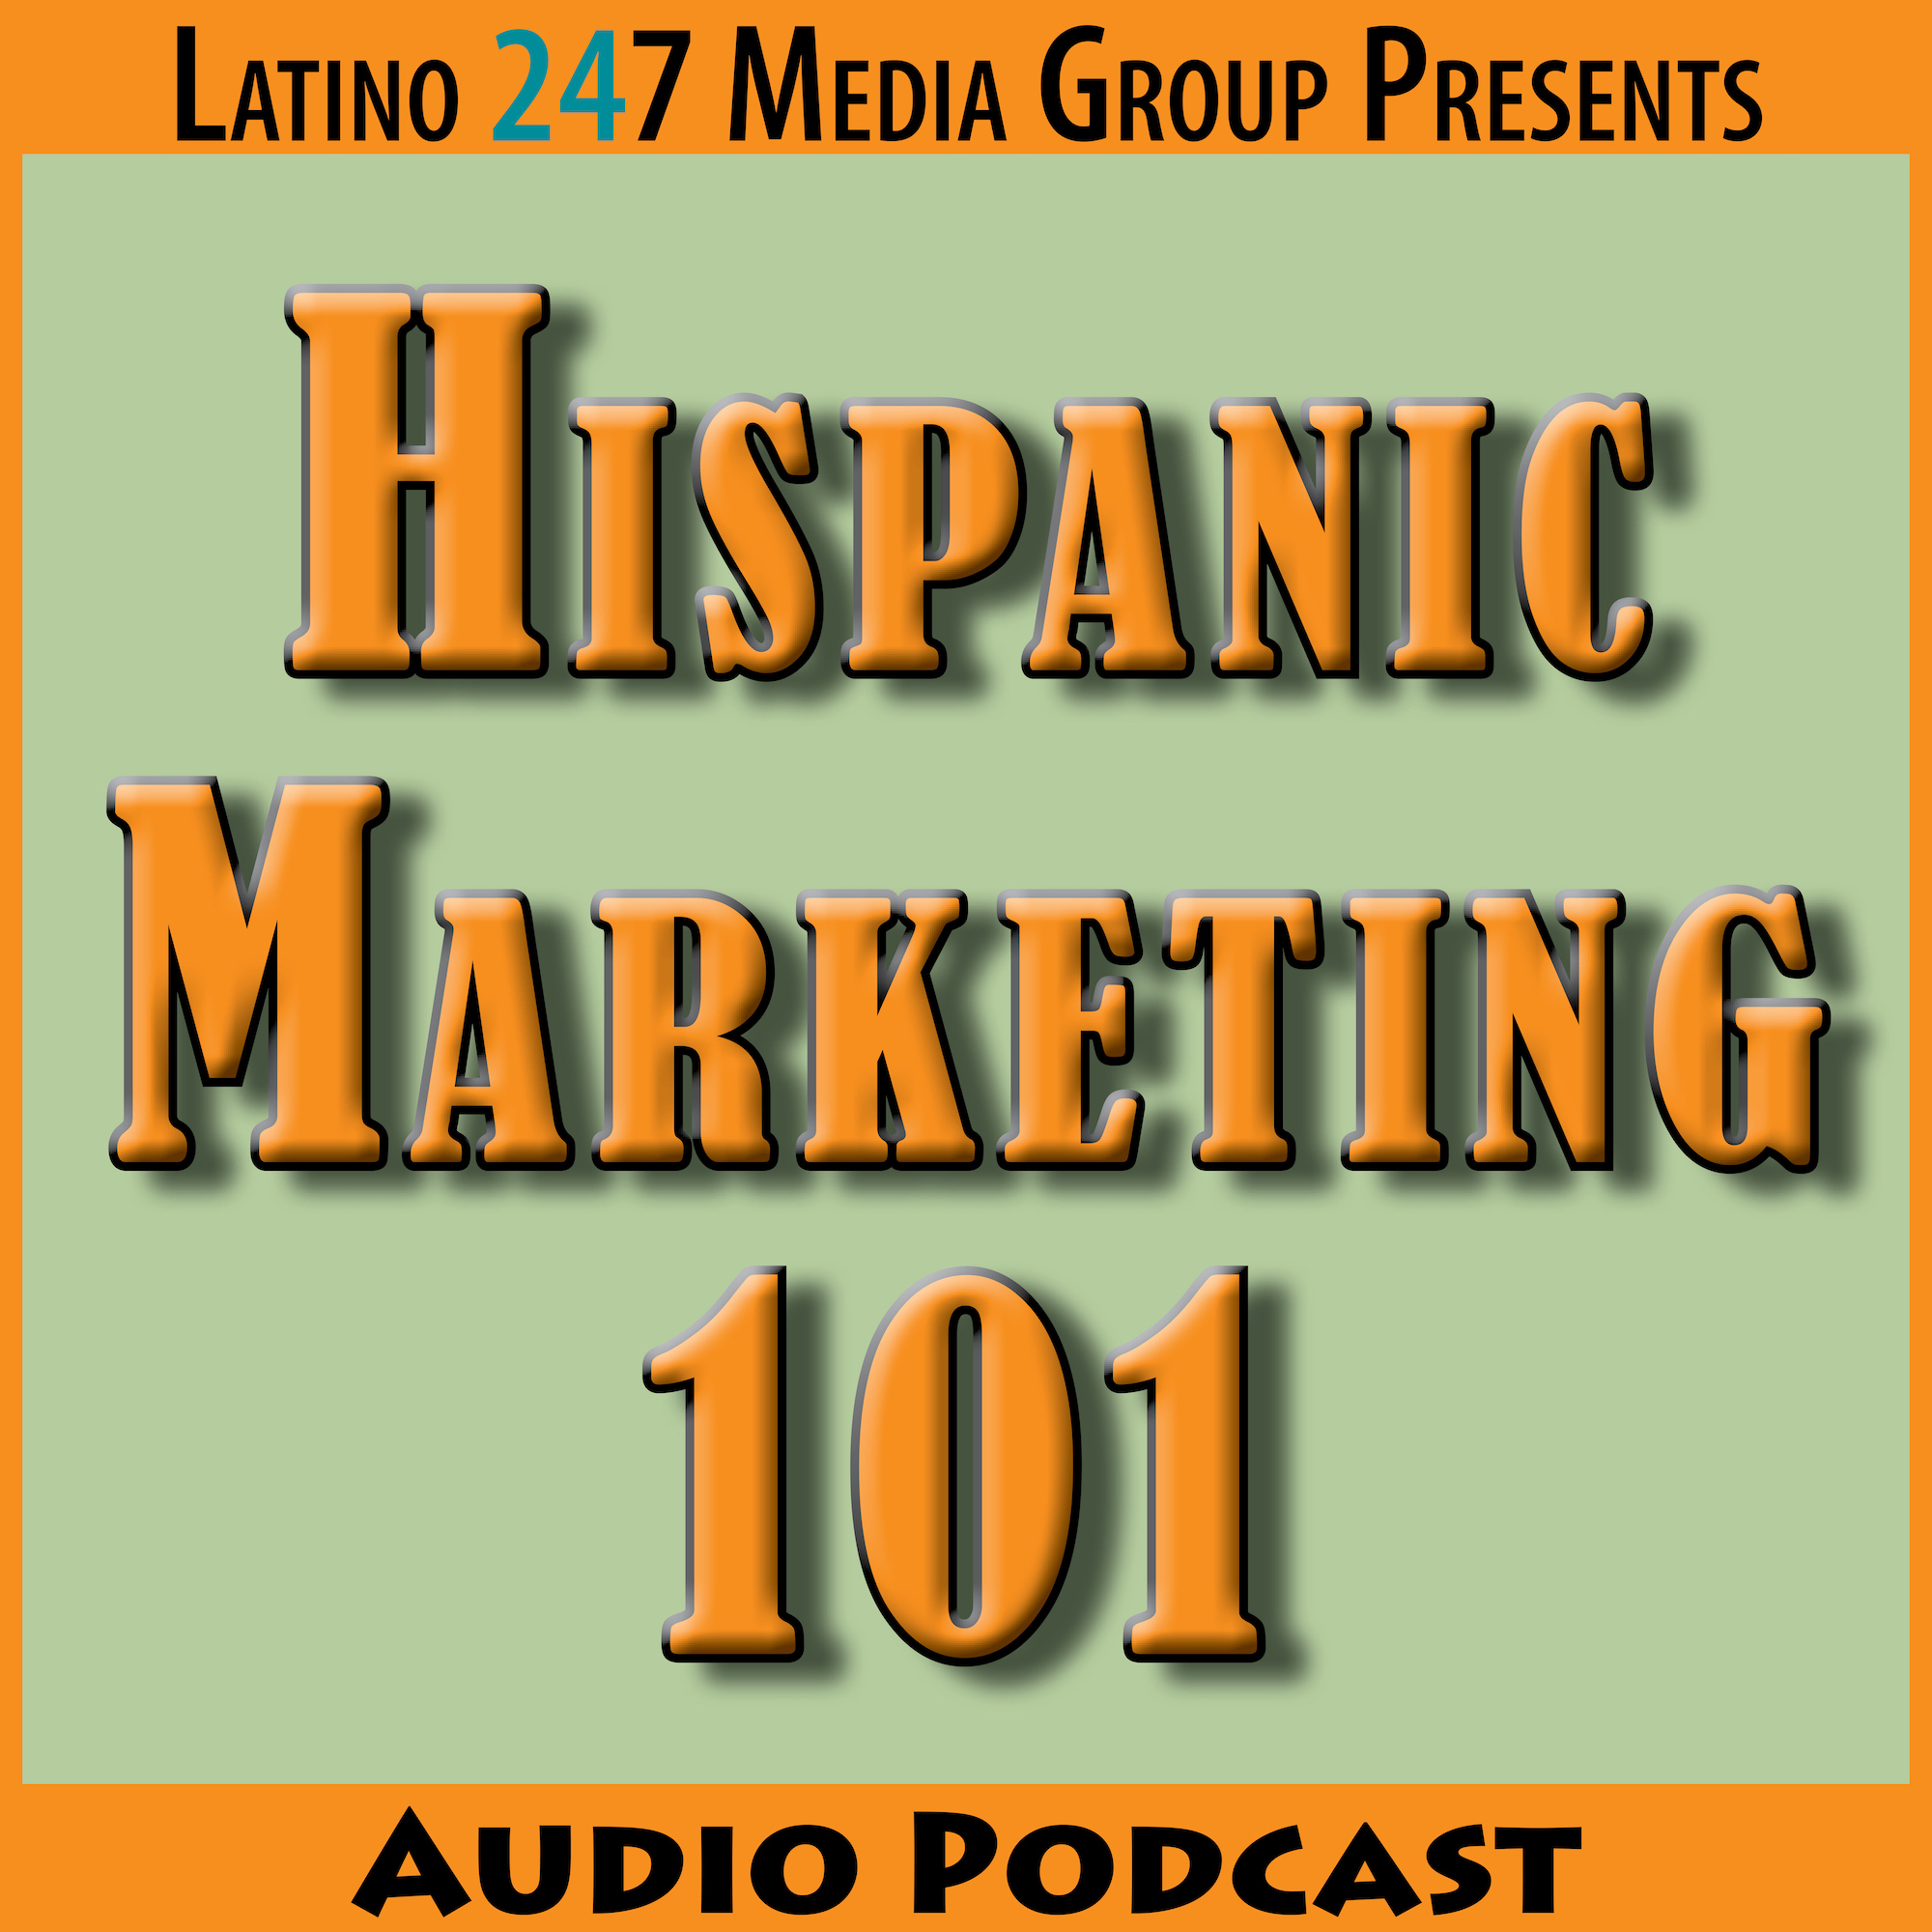 Hispanic Marketing 101